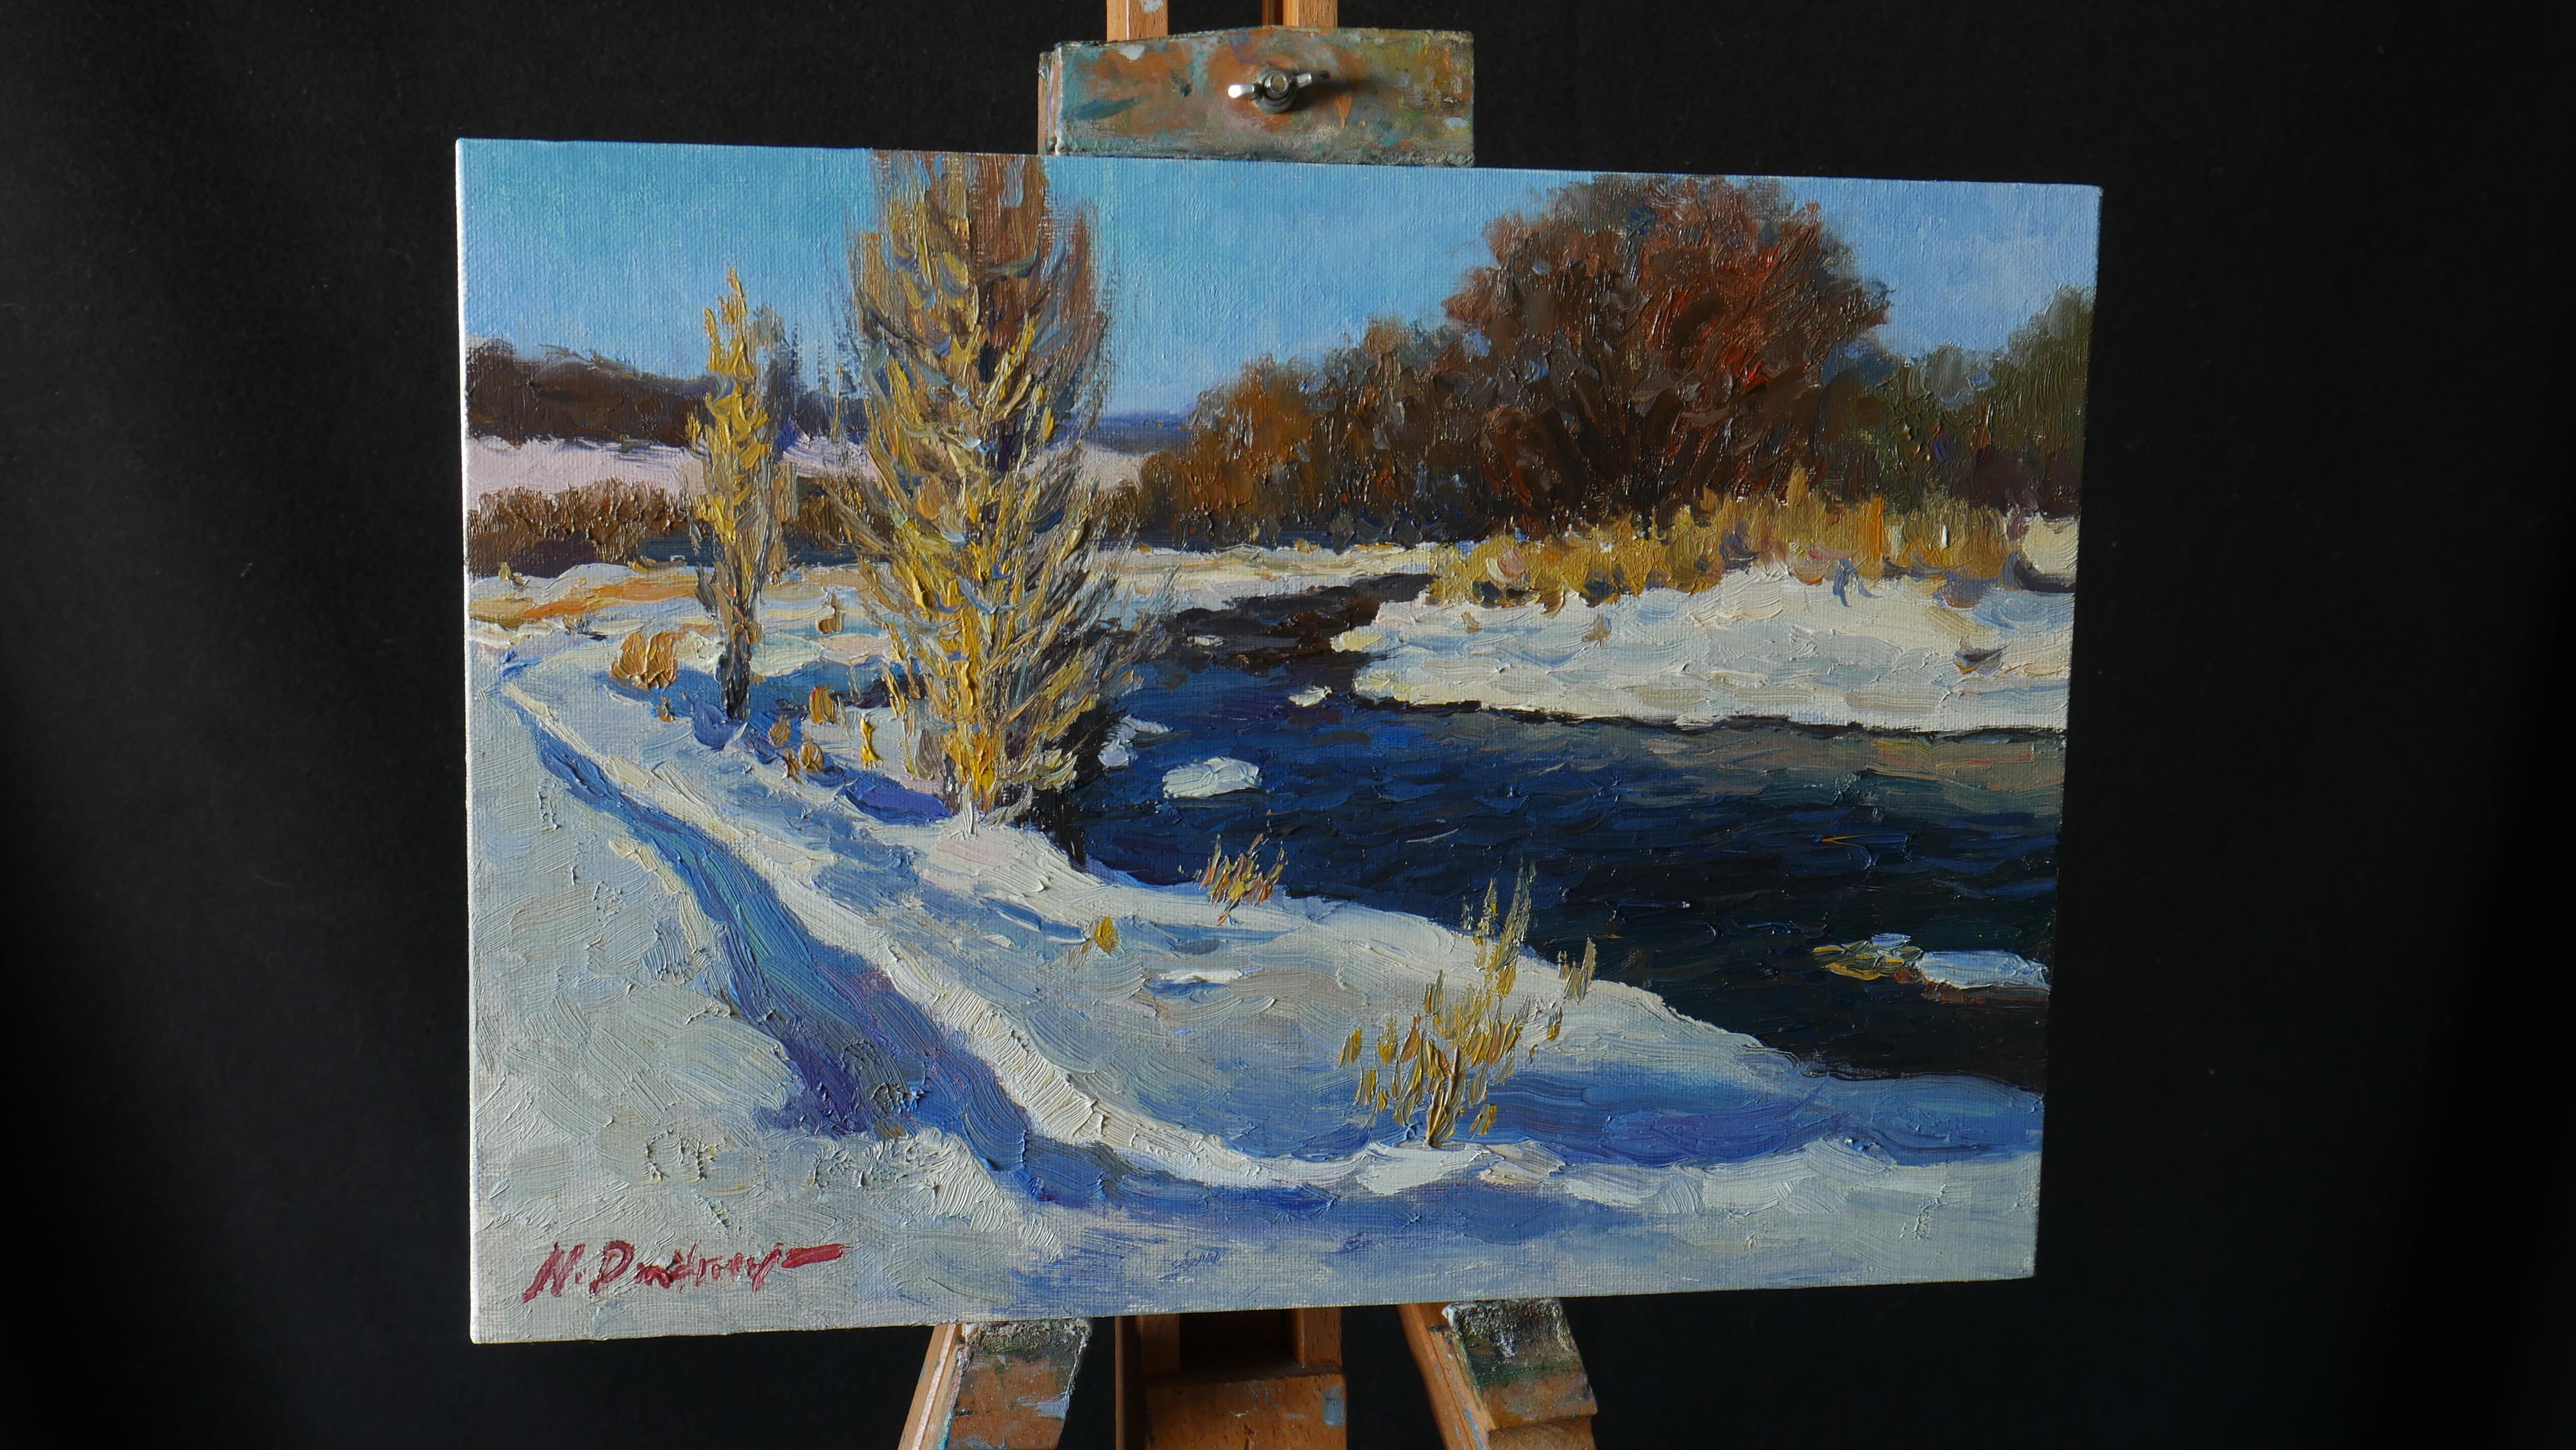 The Sunny Winter Day At The Elchik – Landschaftsgemälde – Painting von Nikolay Dmitriev